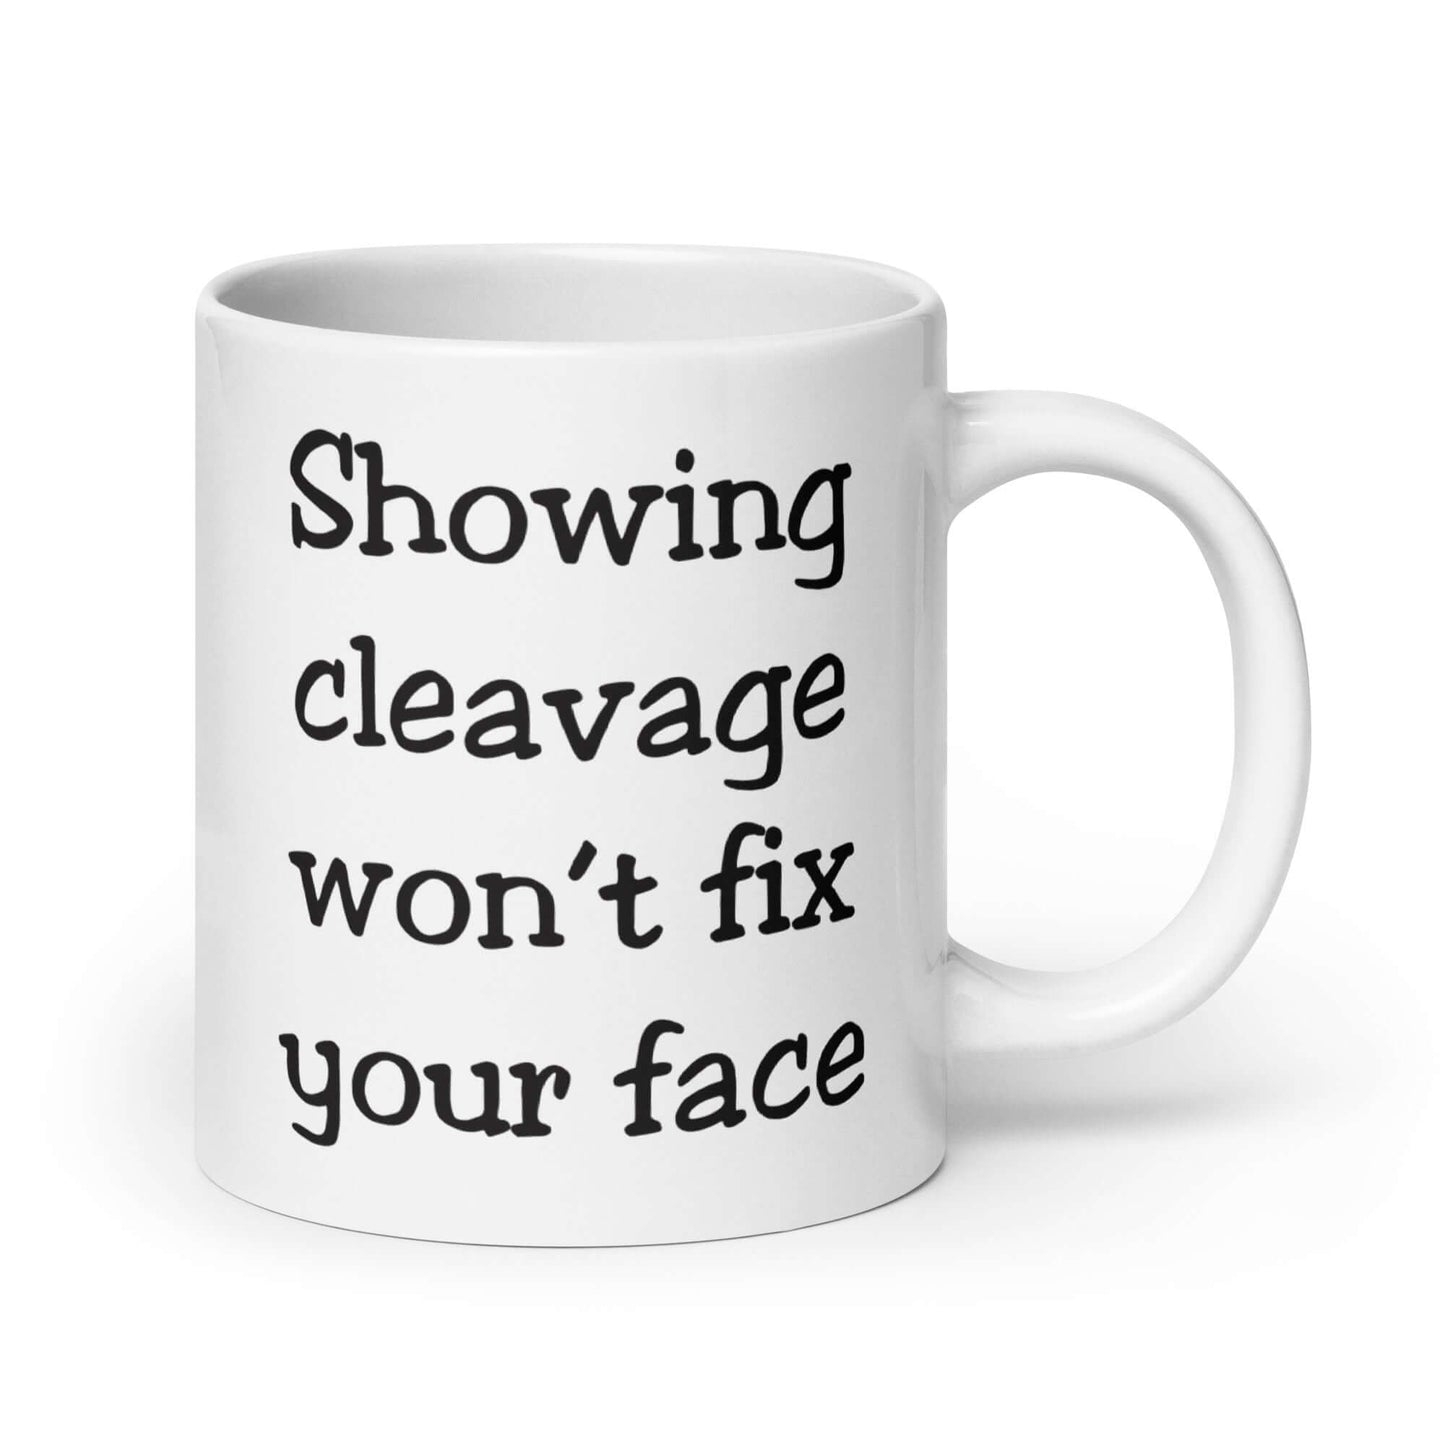 Showing cleavage won't fix your face funny boob joke mug